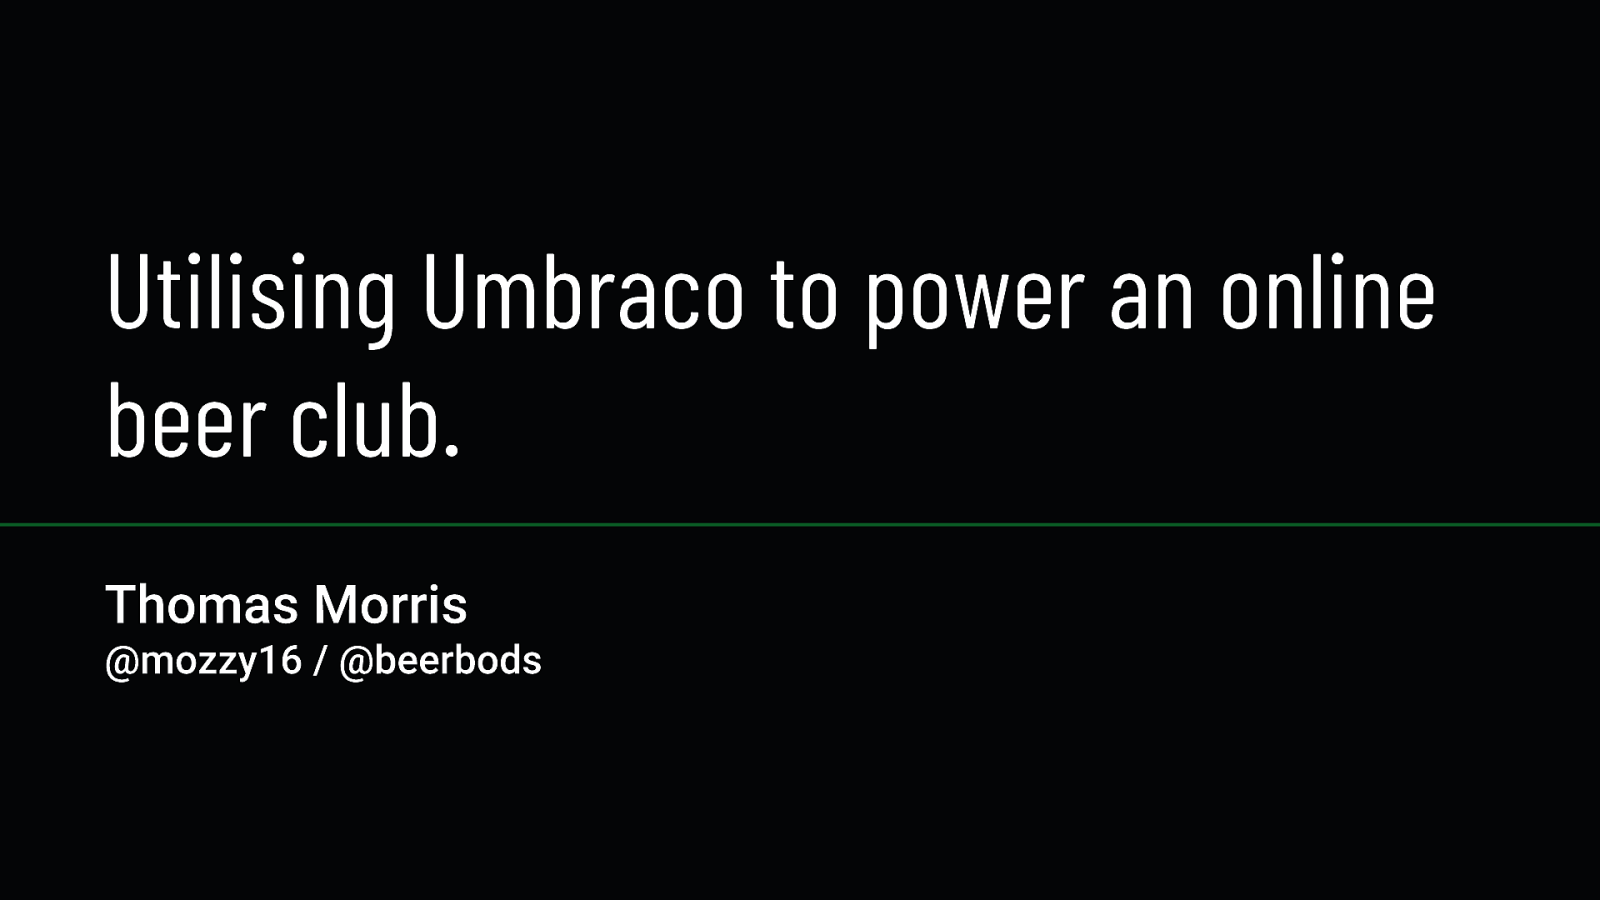 Utilising Umbraco to power an online beer club